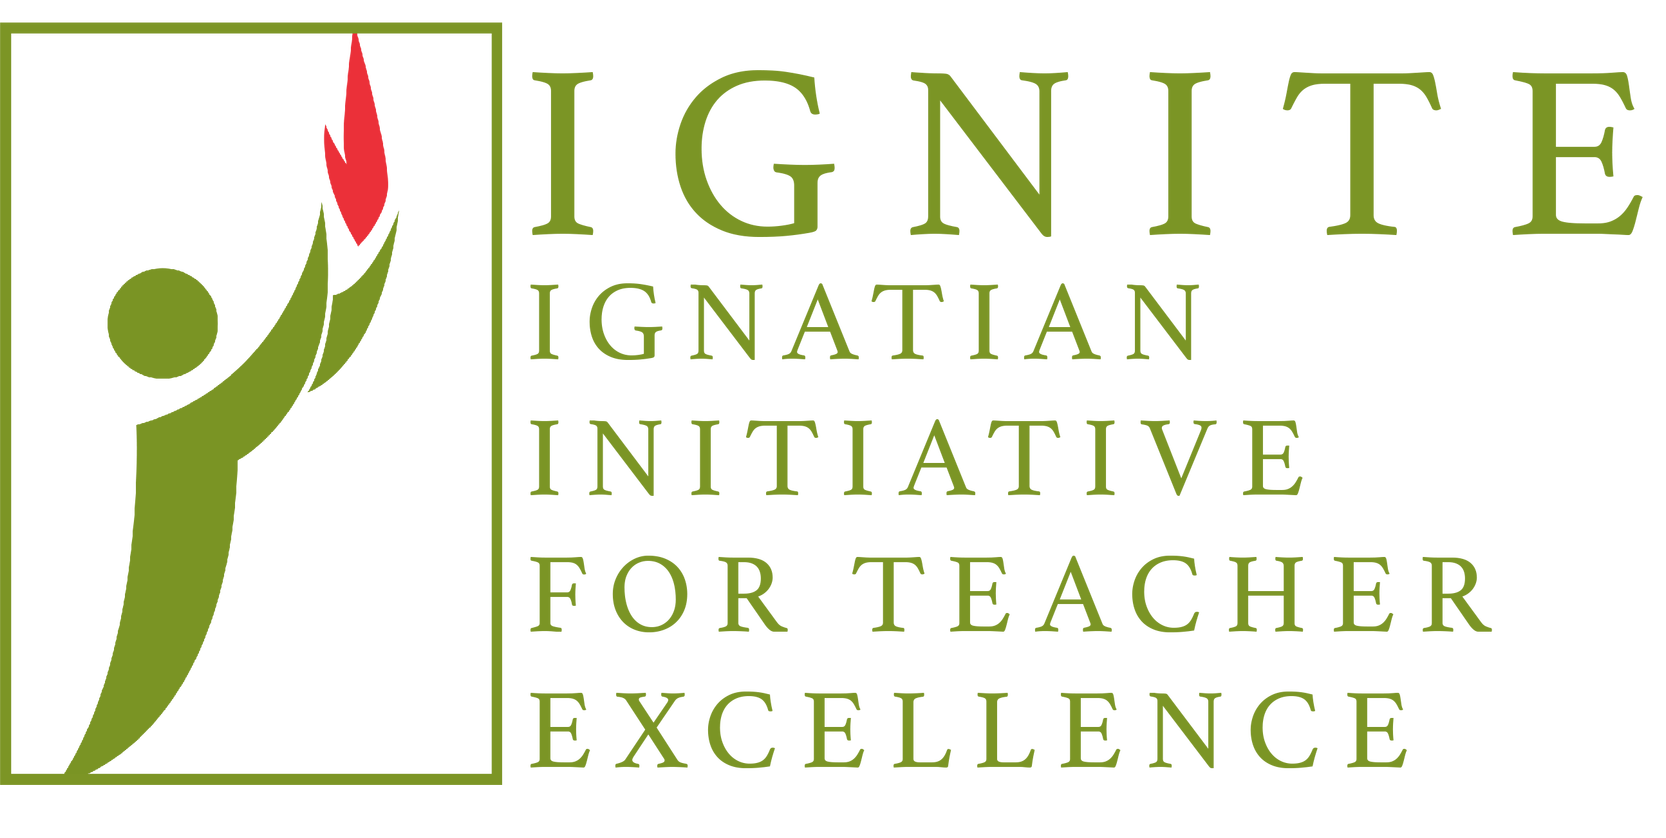 Ignatian Initiative for Teacher Excellence (IGNITE)